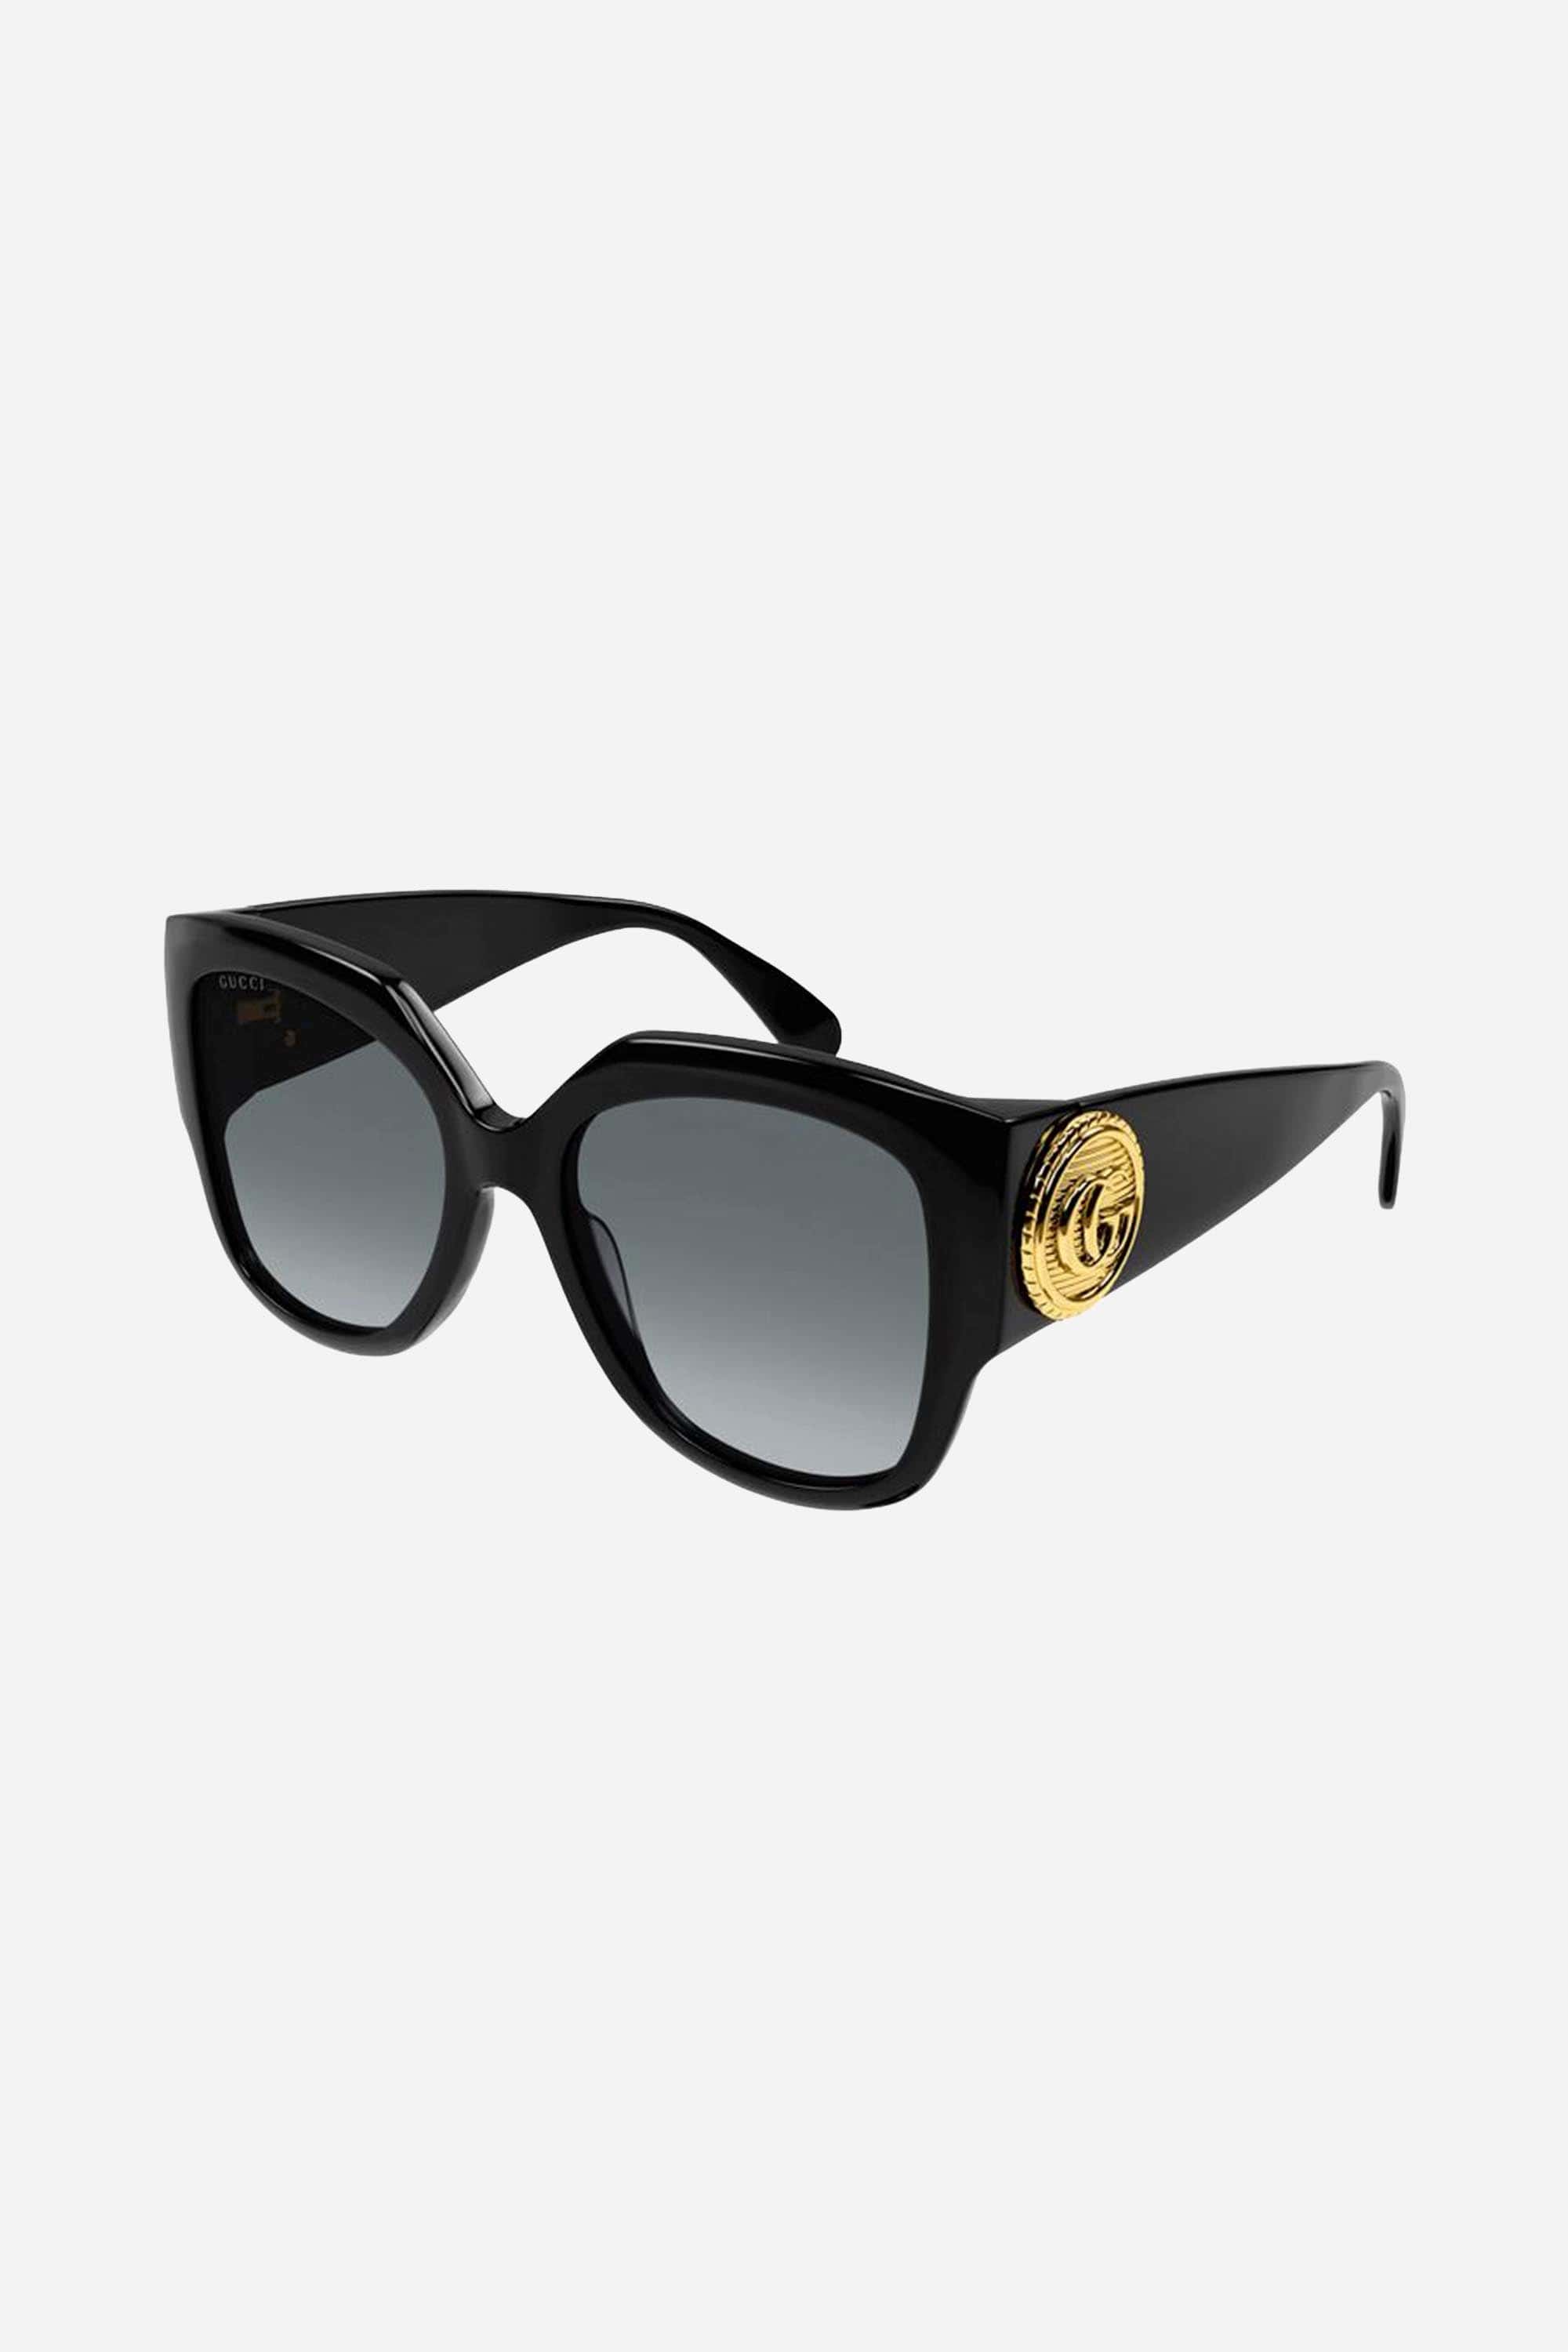 Gucci oversized butterfly black sunglasses - Eyewear Club